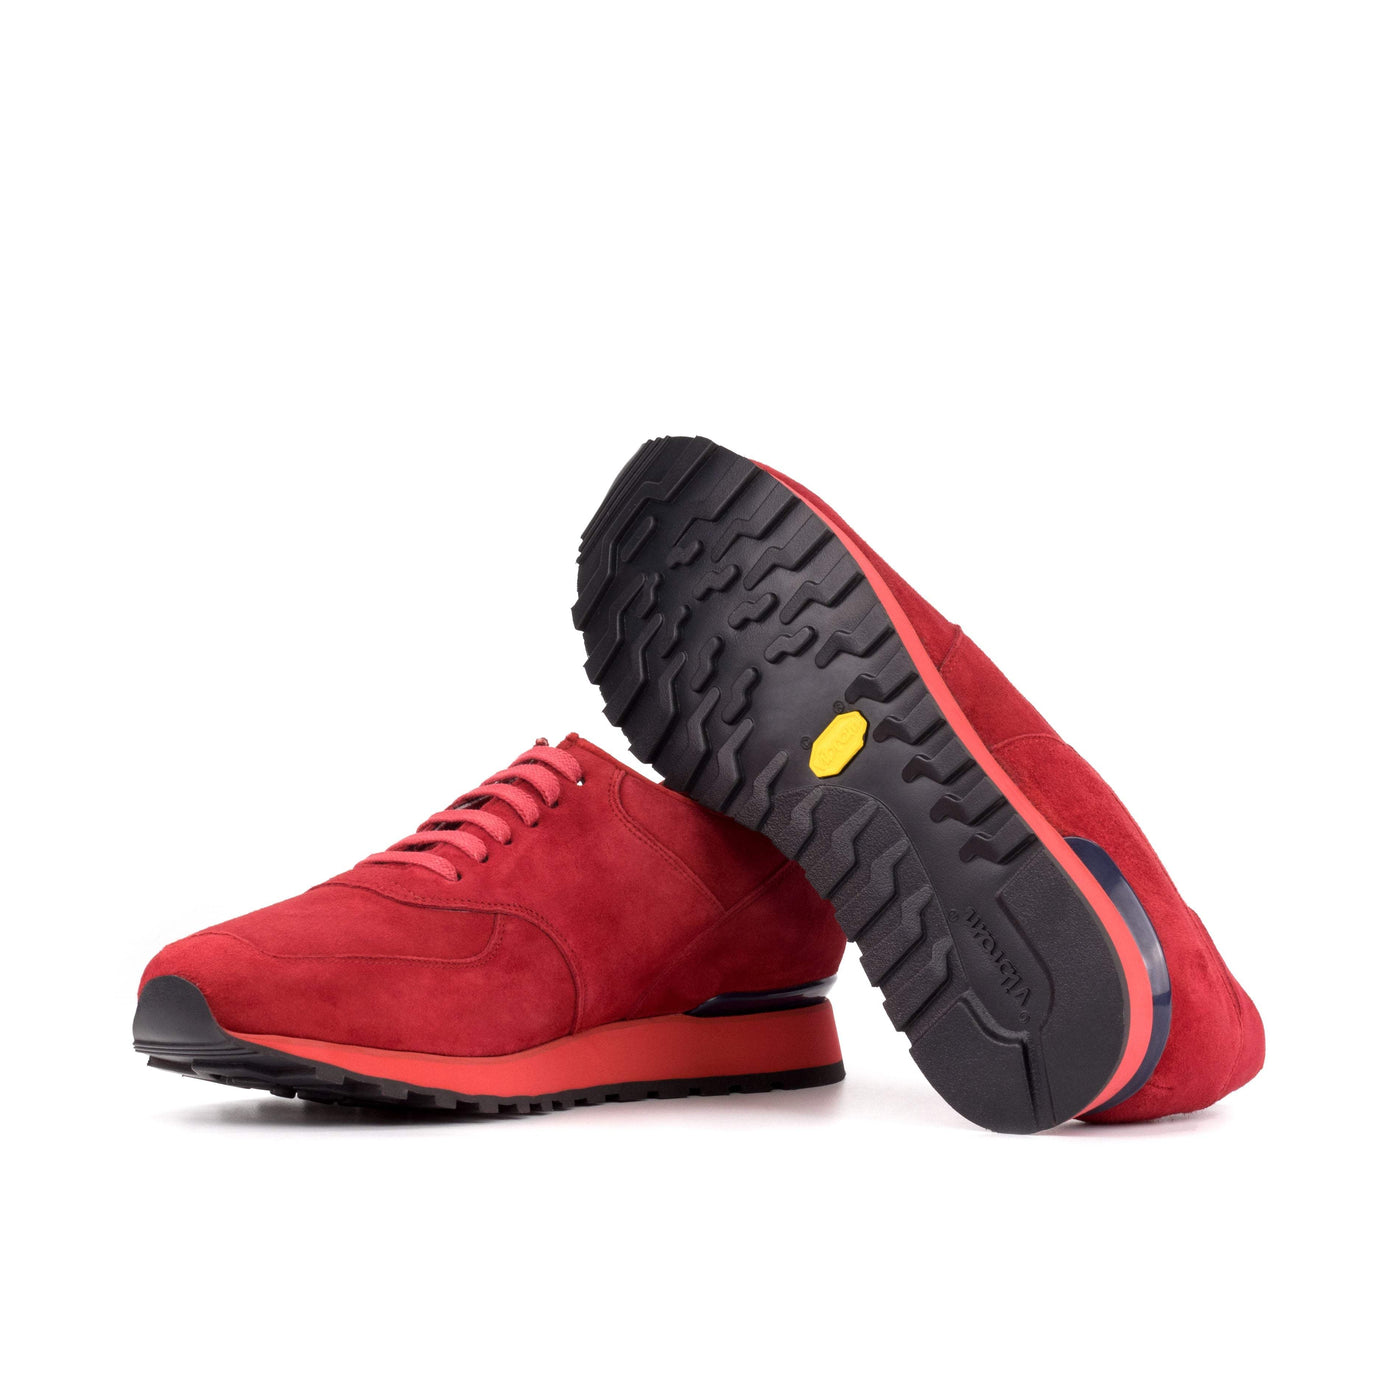 Men's Jogger Sneakers Leather Red 5721 2- MERRIMIUM